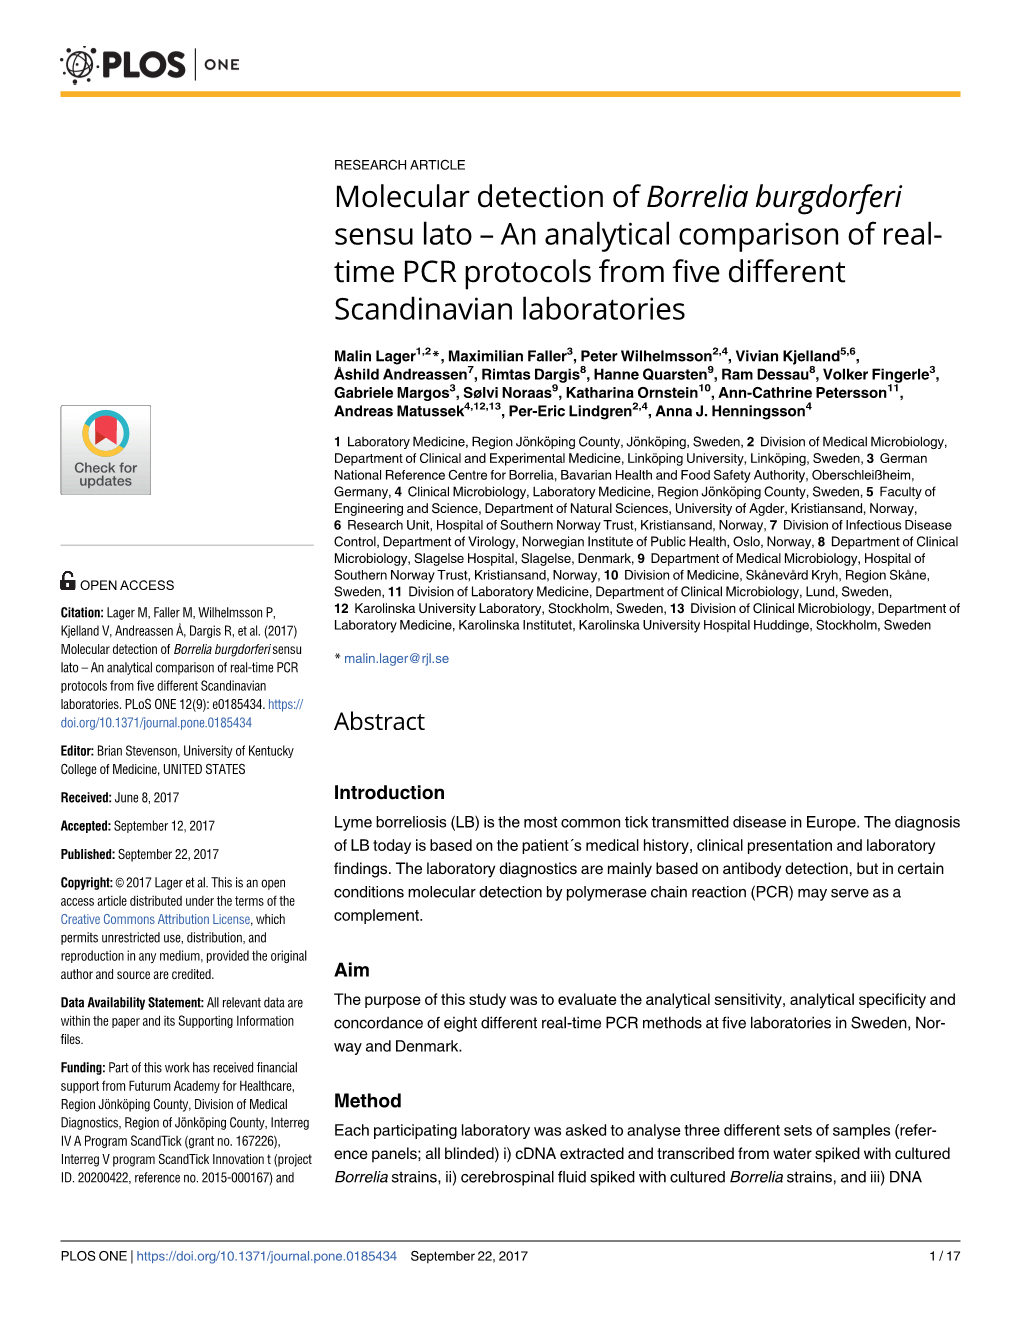 Molecular Detection of Borrelia Burgdorferi Sensu Lato – an Analytical Comparison of Real- Time PCR Protocols from Five Different Scandinavian Laboratories